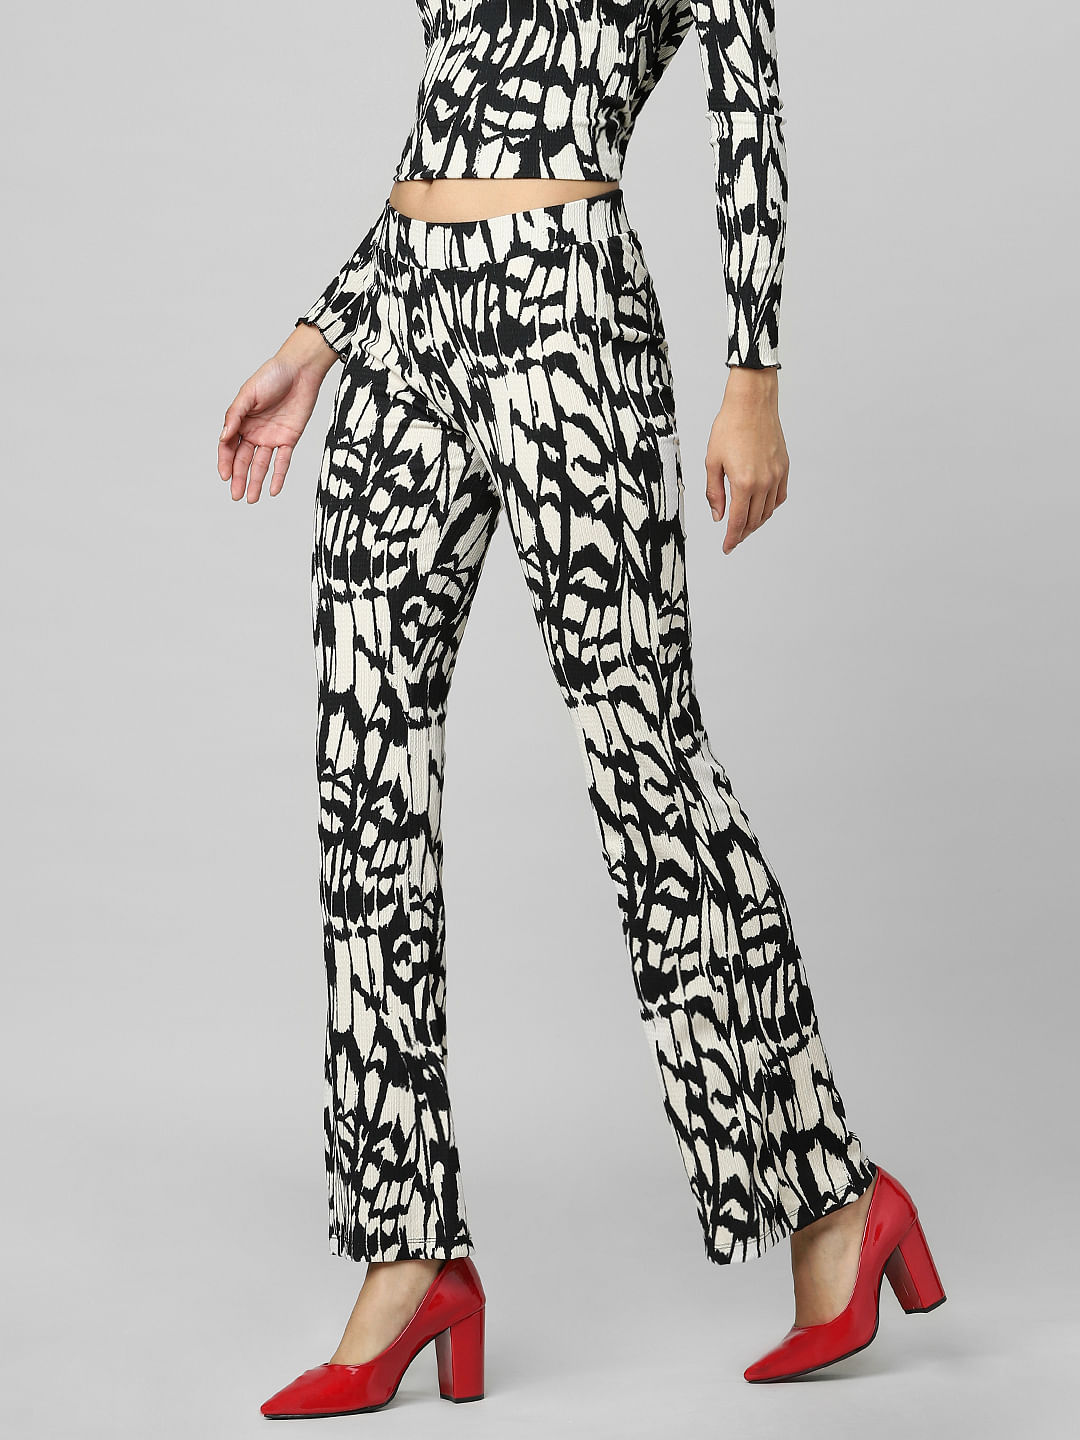 How to Wear Zebra Print Pants For Fall | Hello I'm 50ish